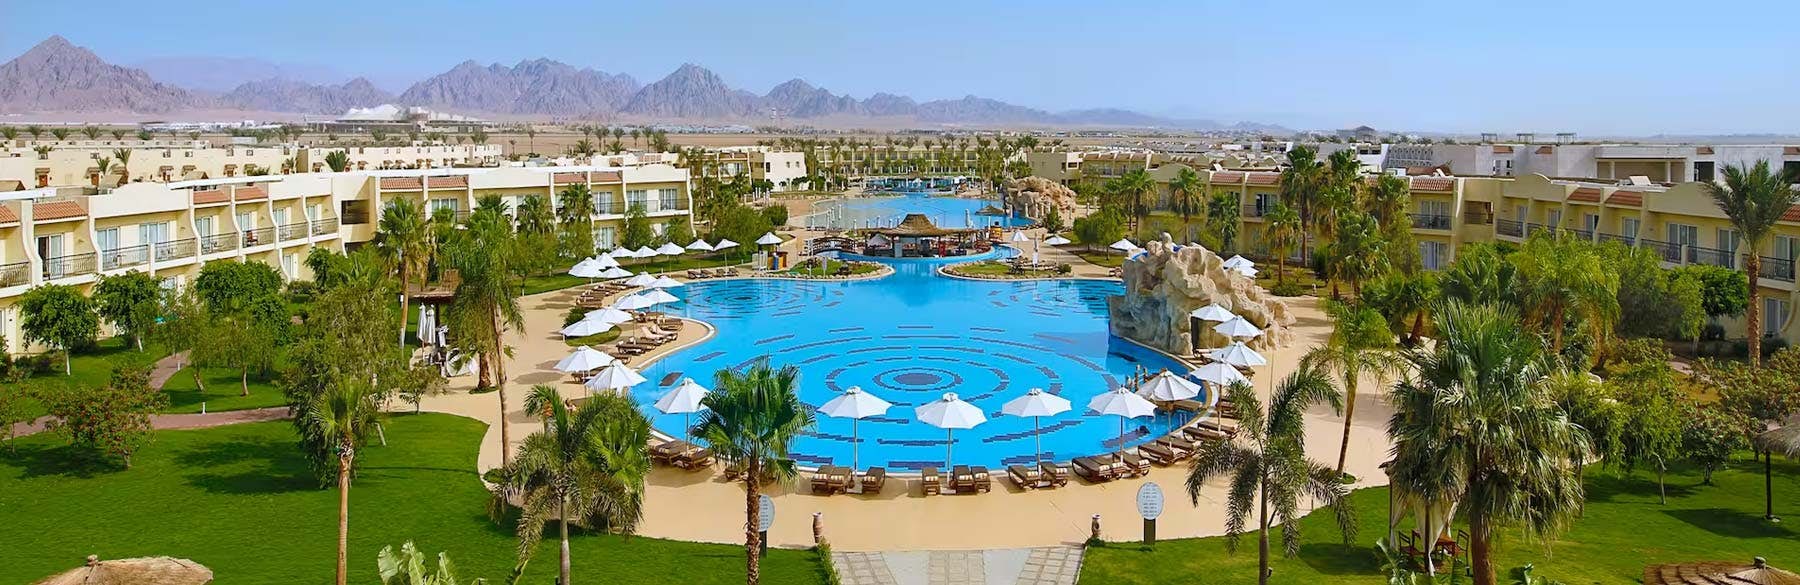 DoubleTree By Hilton Sharm El Sheikh - Sharks Bay Resort, Sharm El Sheikh